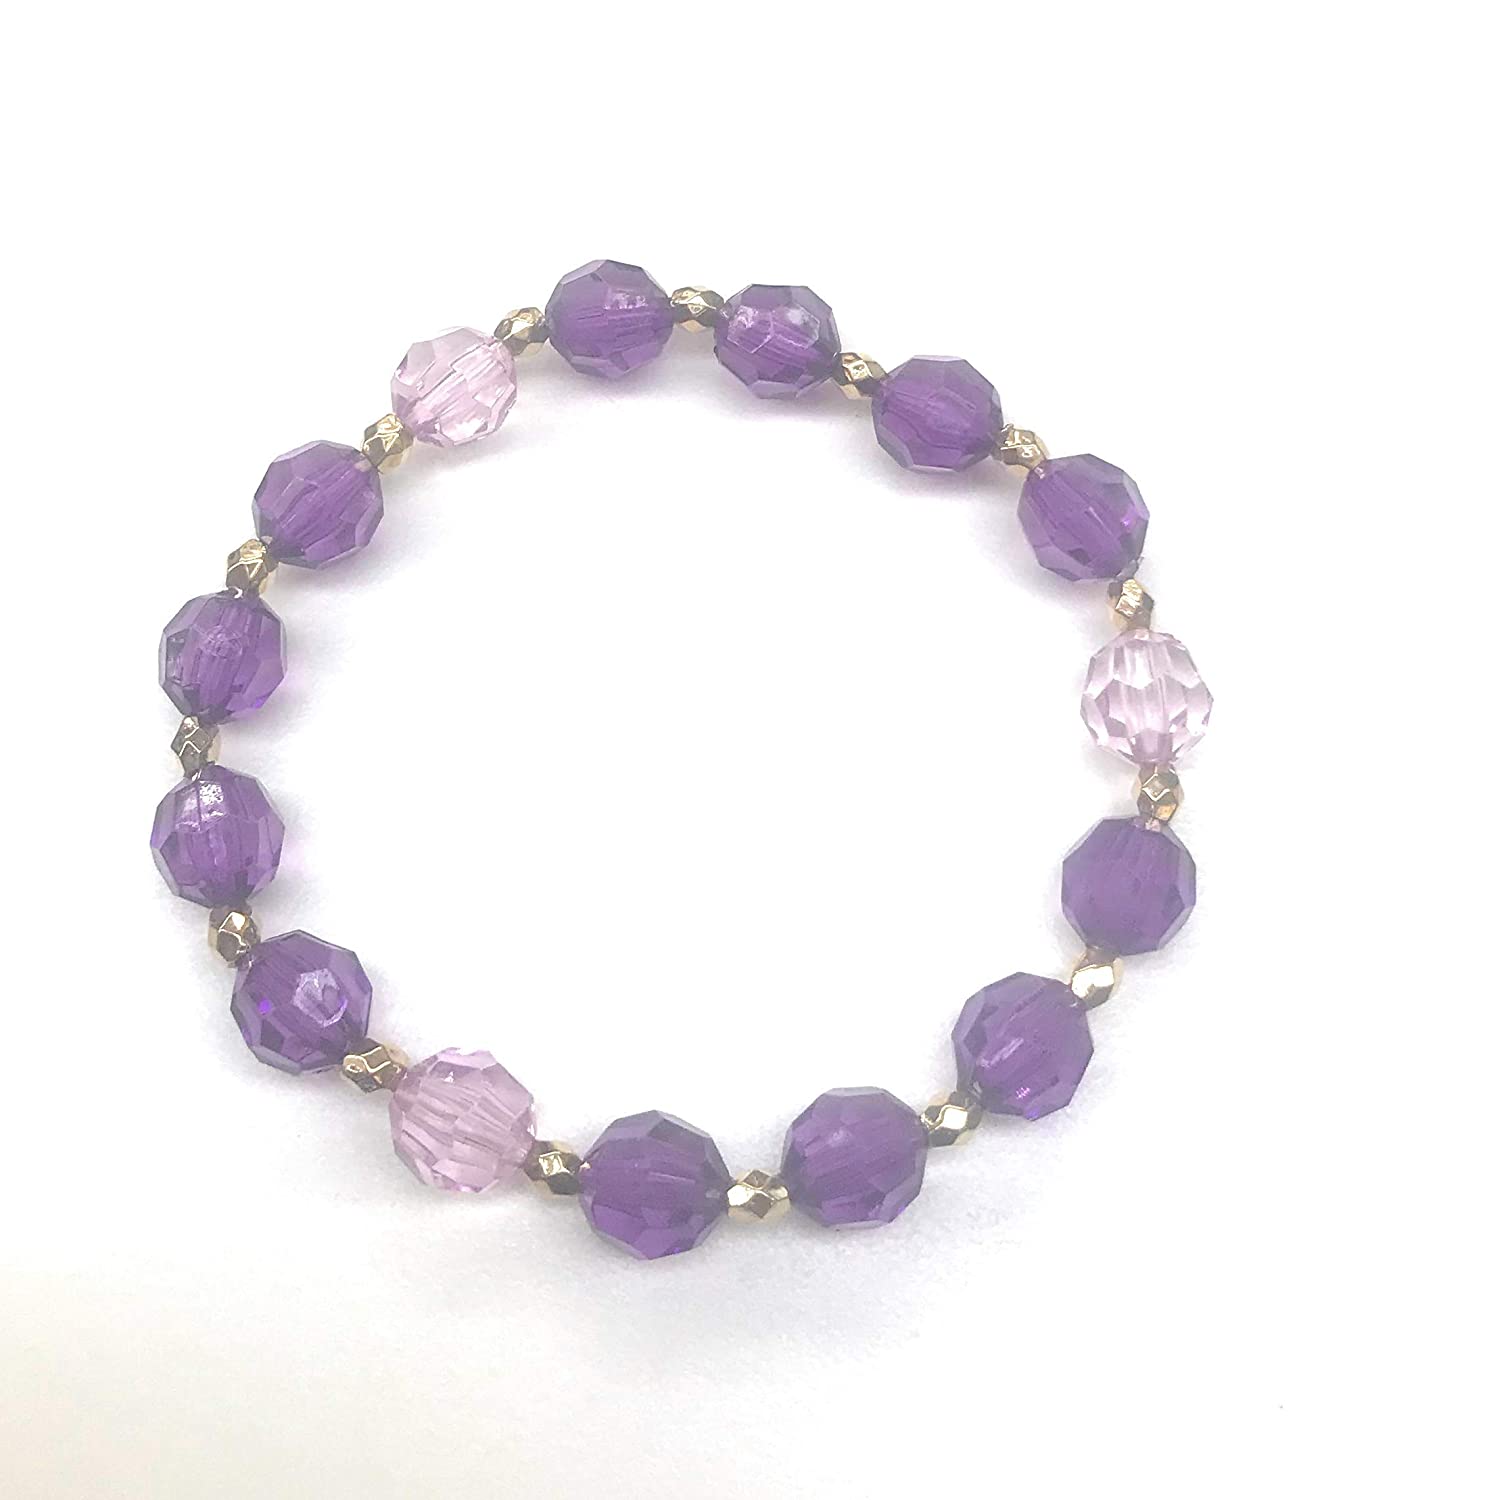 Shades of Purple Beaded Stretch Bracelet from Scott D Jewelry Designs